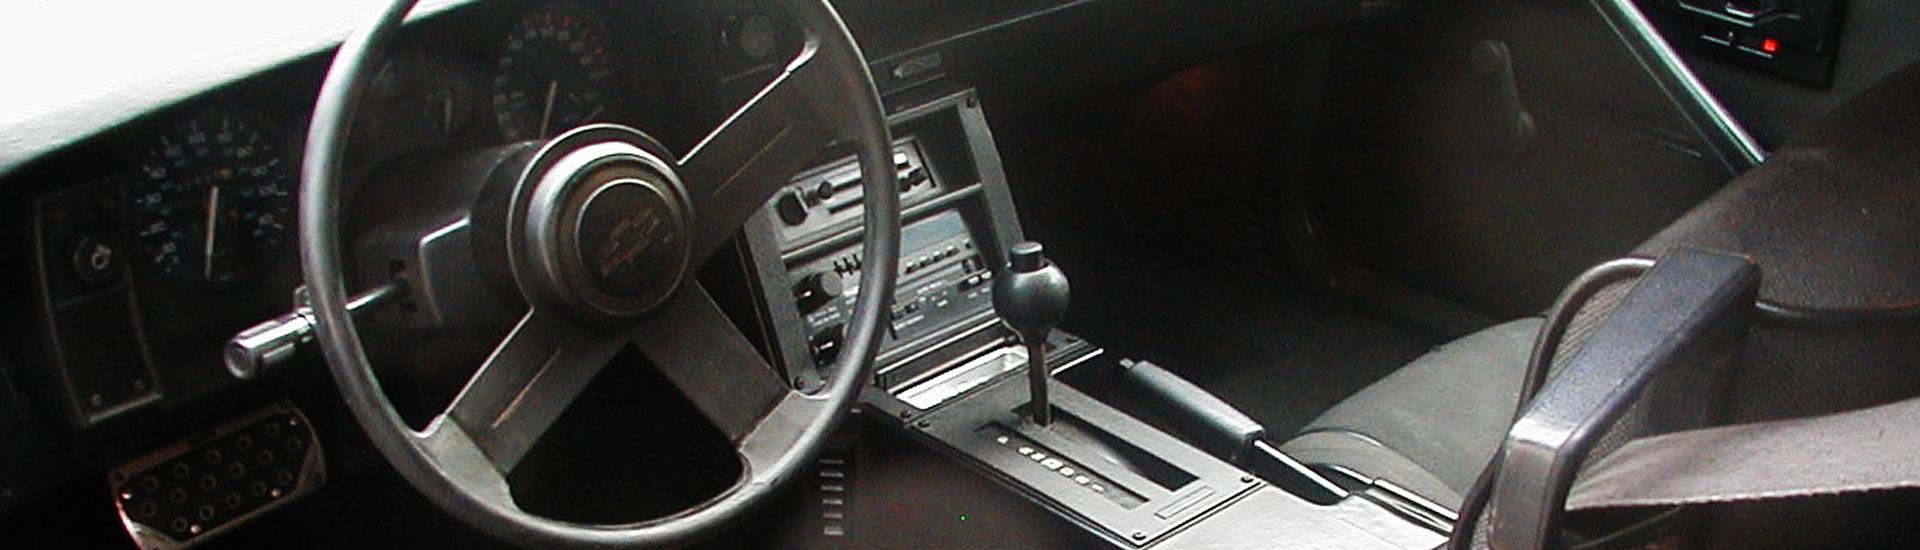 1986 Chevrolet Camaro Dash Kits